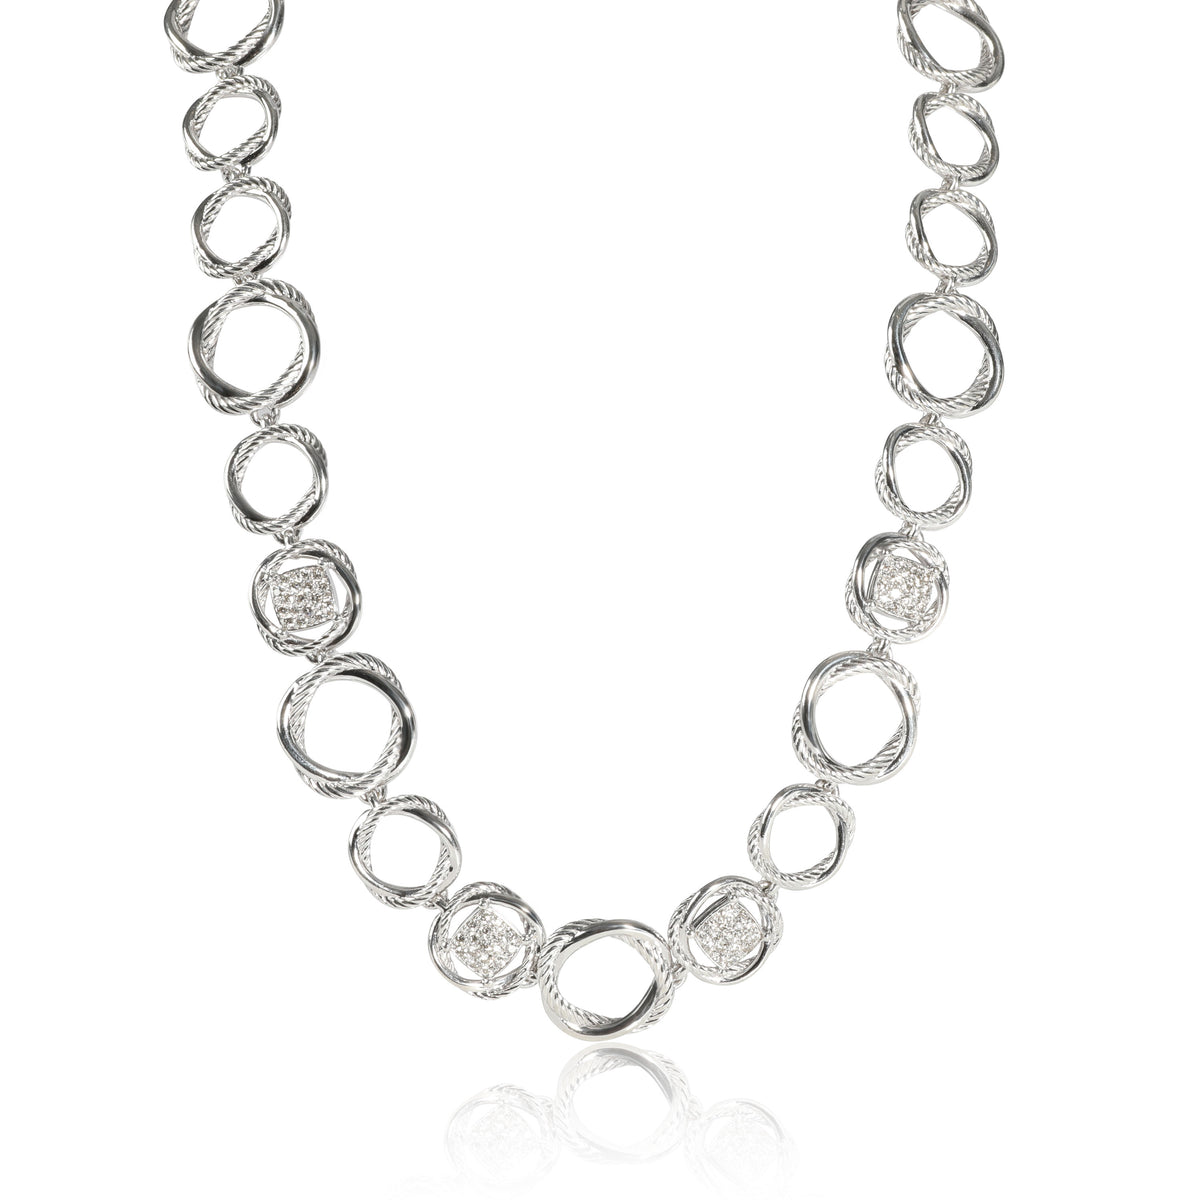 David Yurman Infinity Diamond Necklace in  Sterling Silver 0.80 CTW